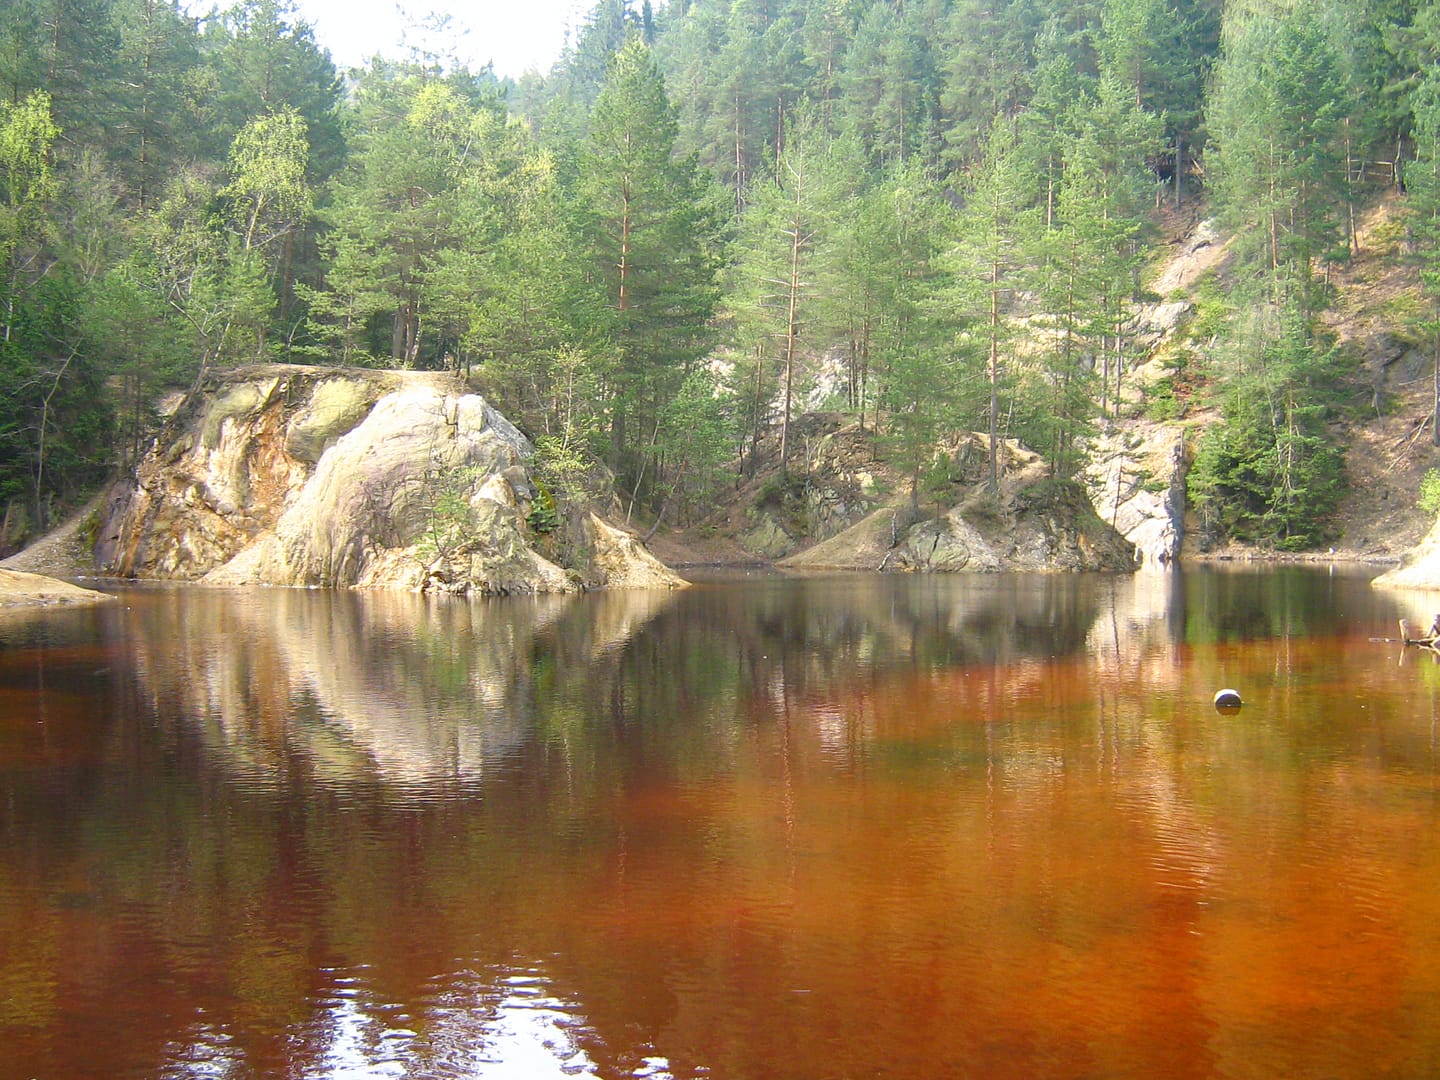 Kolorowe Jeziorka - Purpurowe Jeziorko 2008 rok.